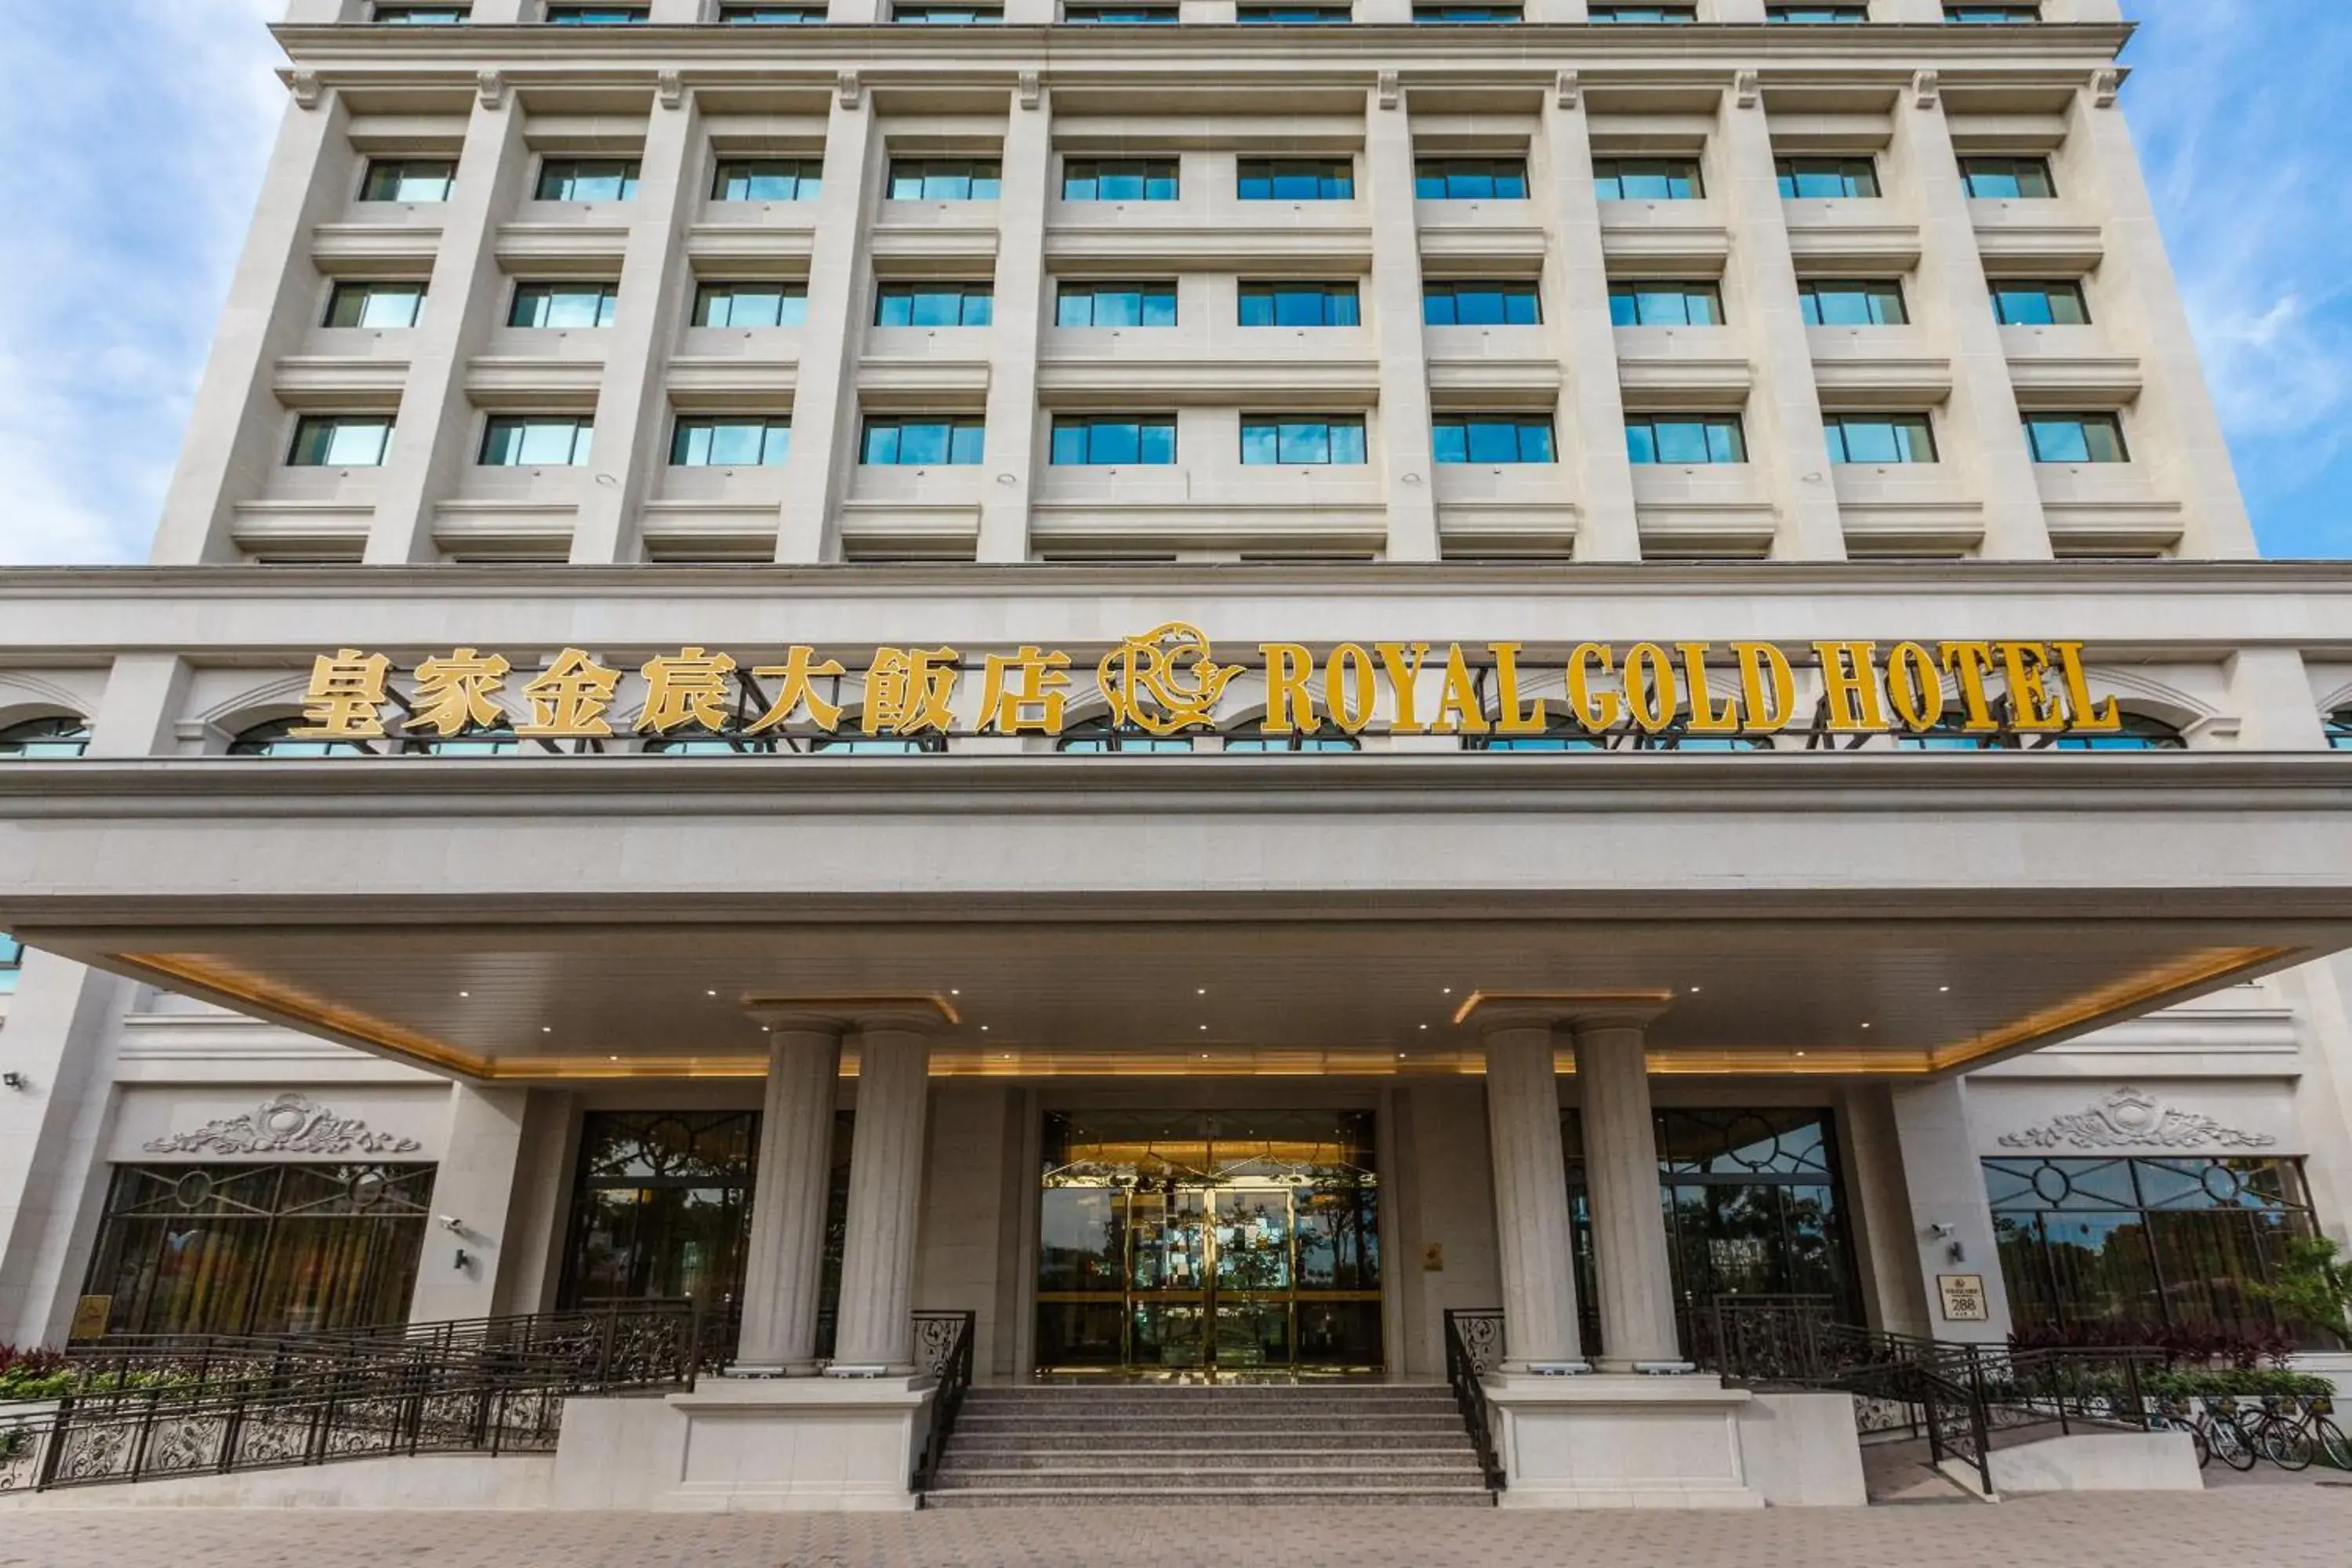 Property building, Facade/Entrance in Royal Gold Hotel